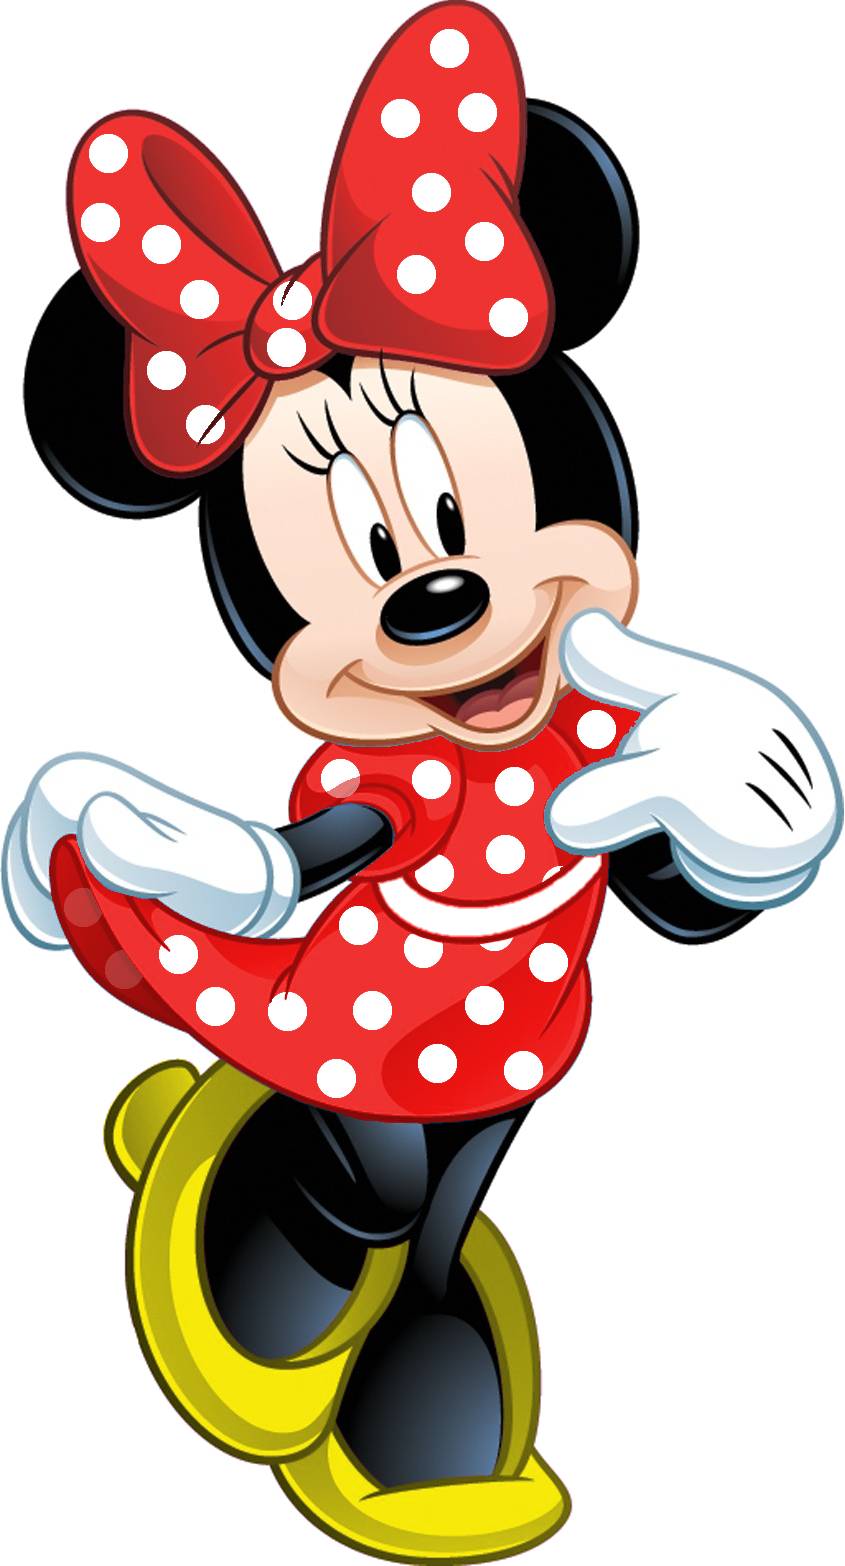 Minnie Mouse | Mickey and Friends Wiki | FANDOM powered by Wikia